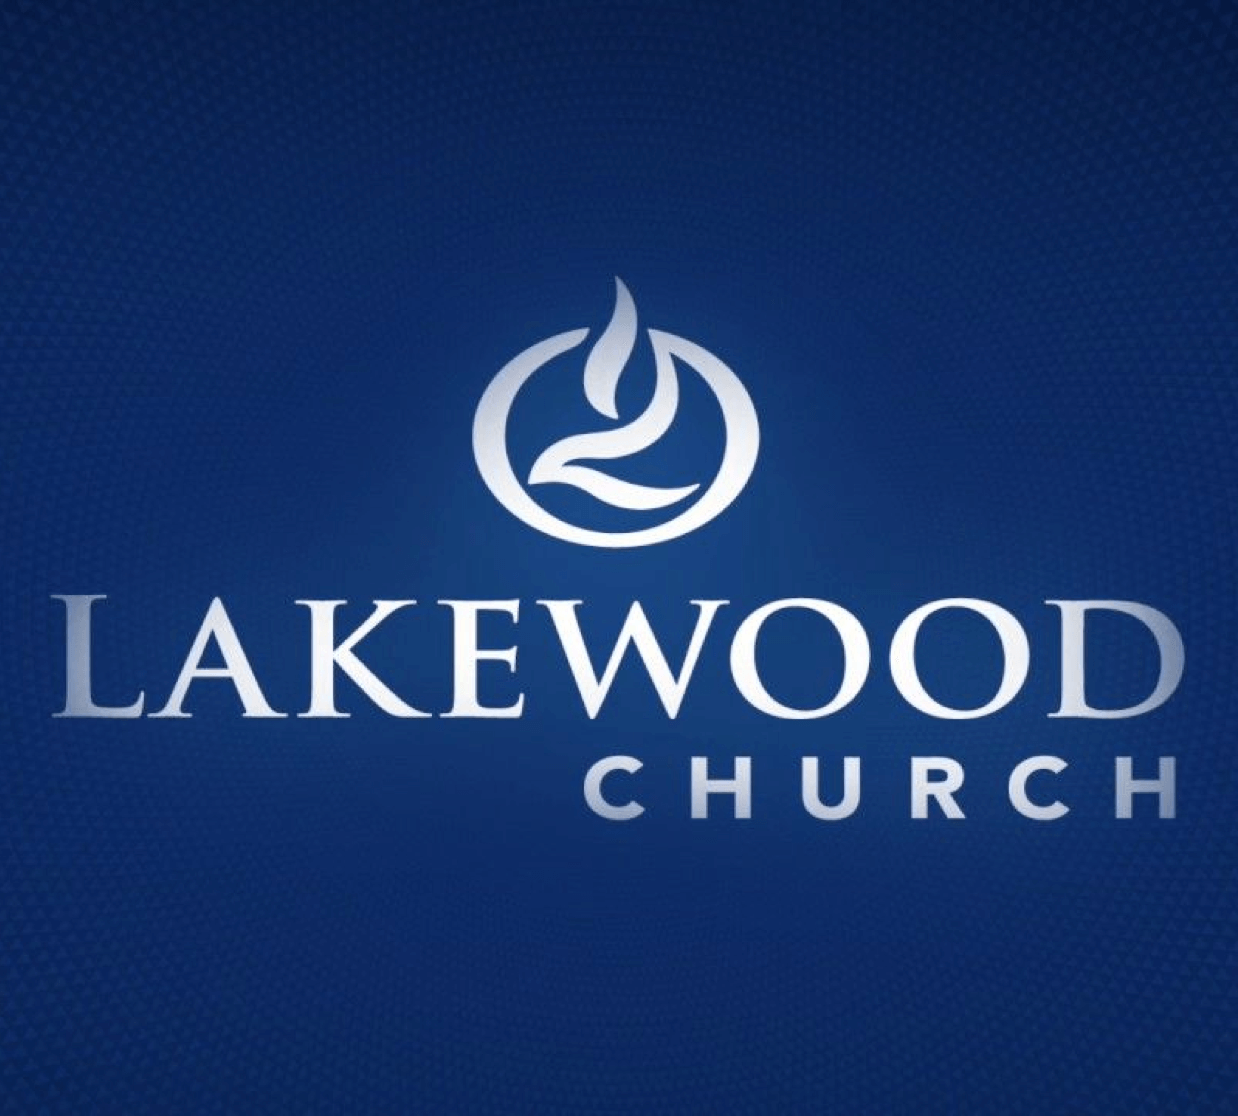 Lakewood Church